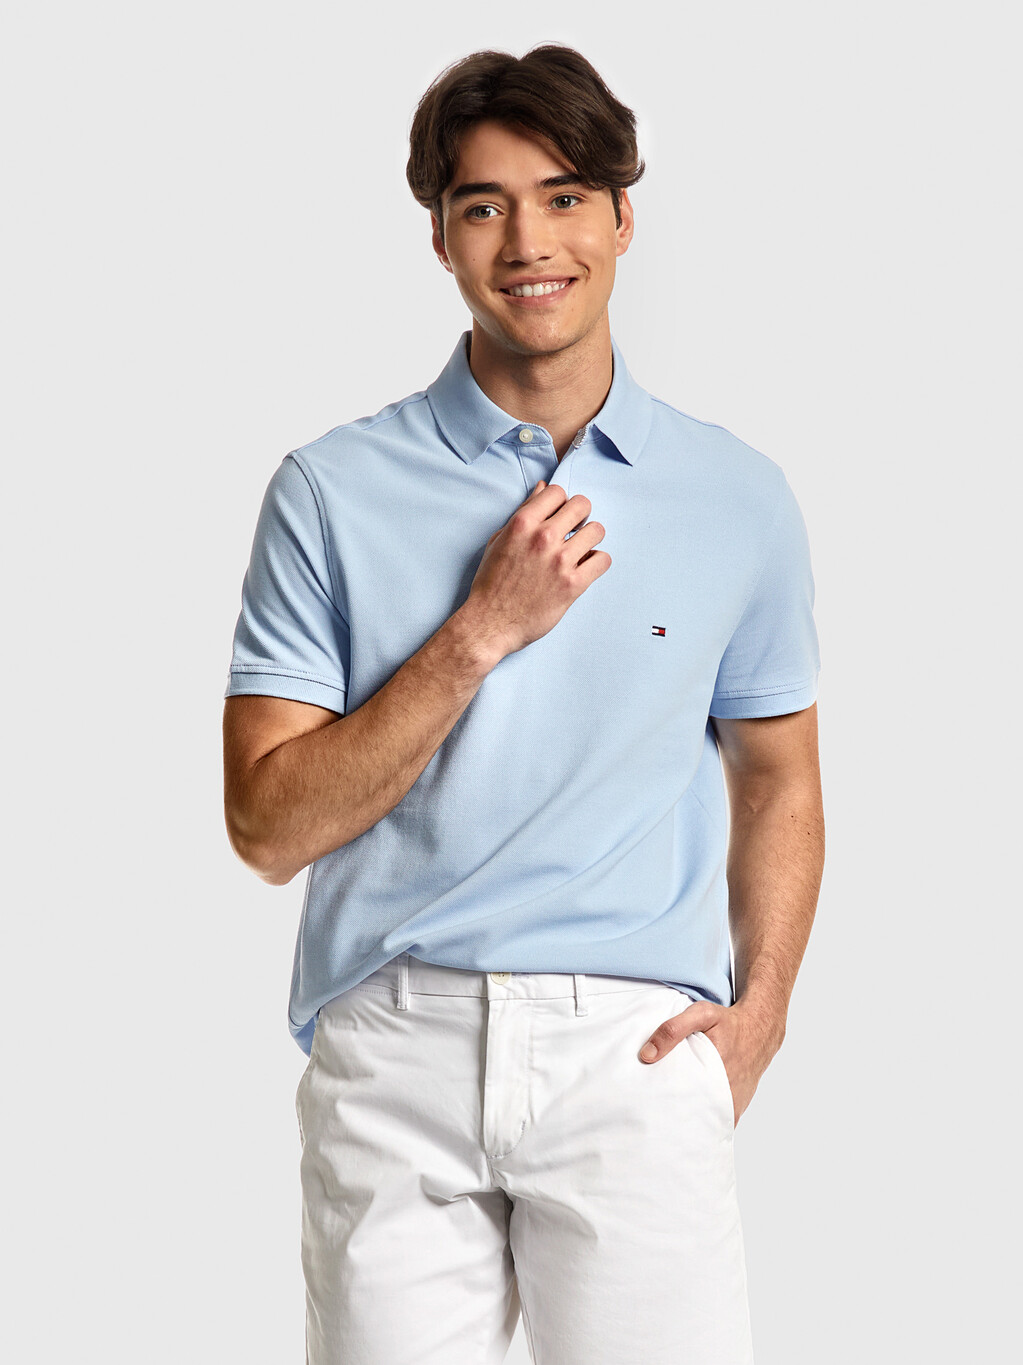 Men's Polo Shirts  Tommy Hilfiger Singapore